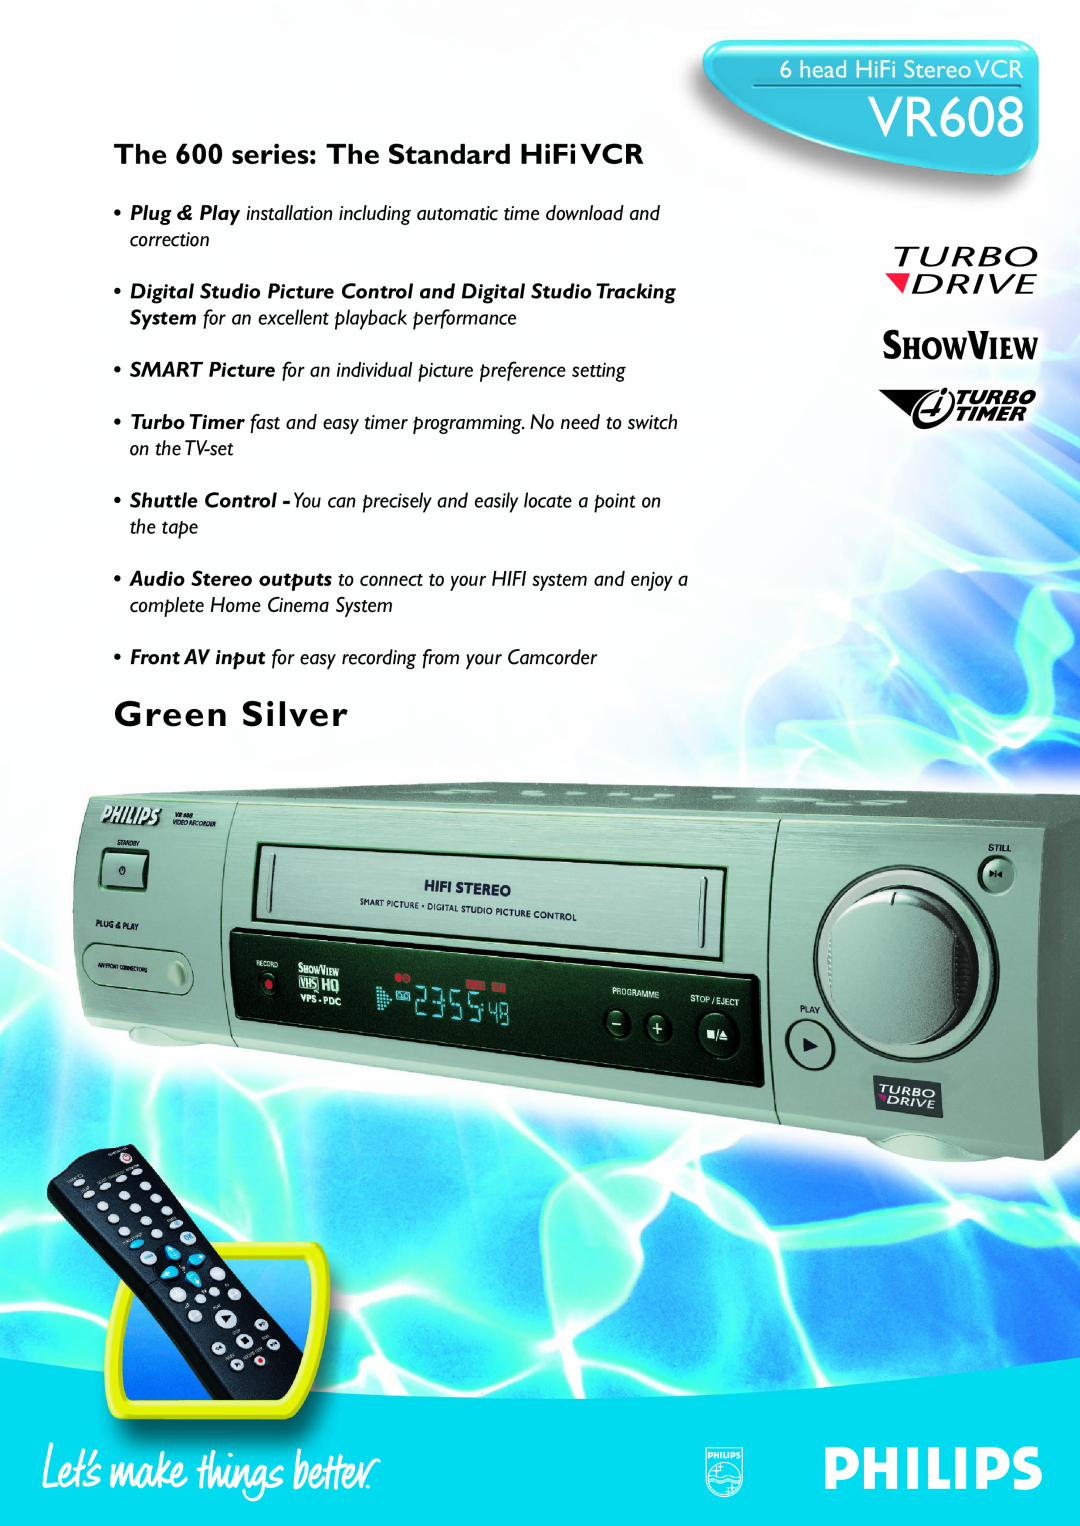 Philips VR608 manual head HiFi Stereo VCR, Green Silver, The 600 series The Standard HiFi VCR 